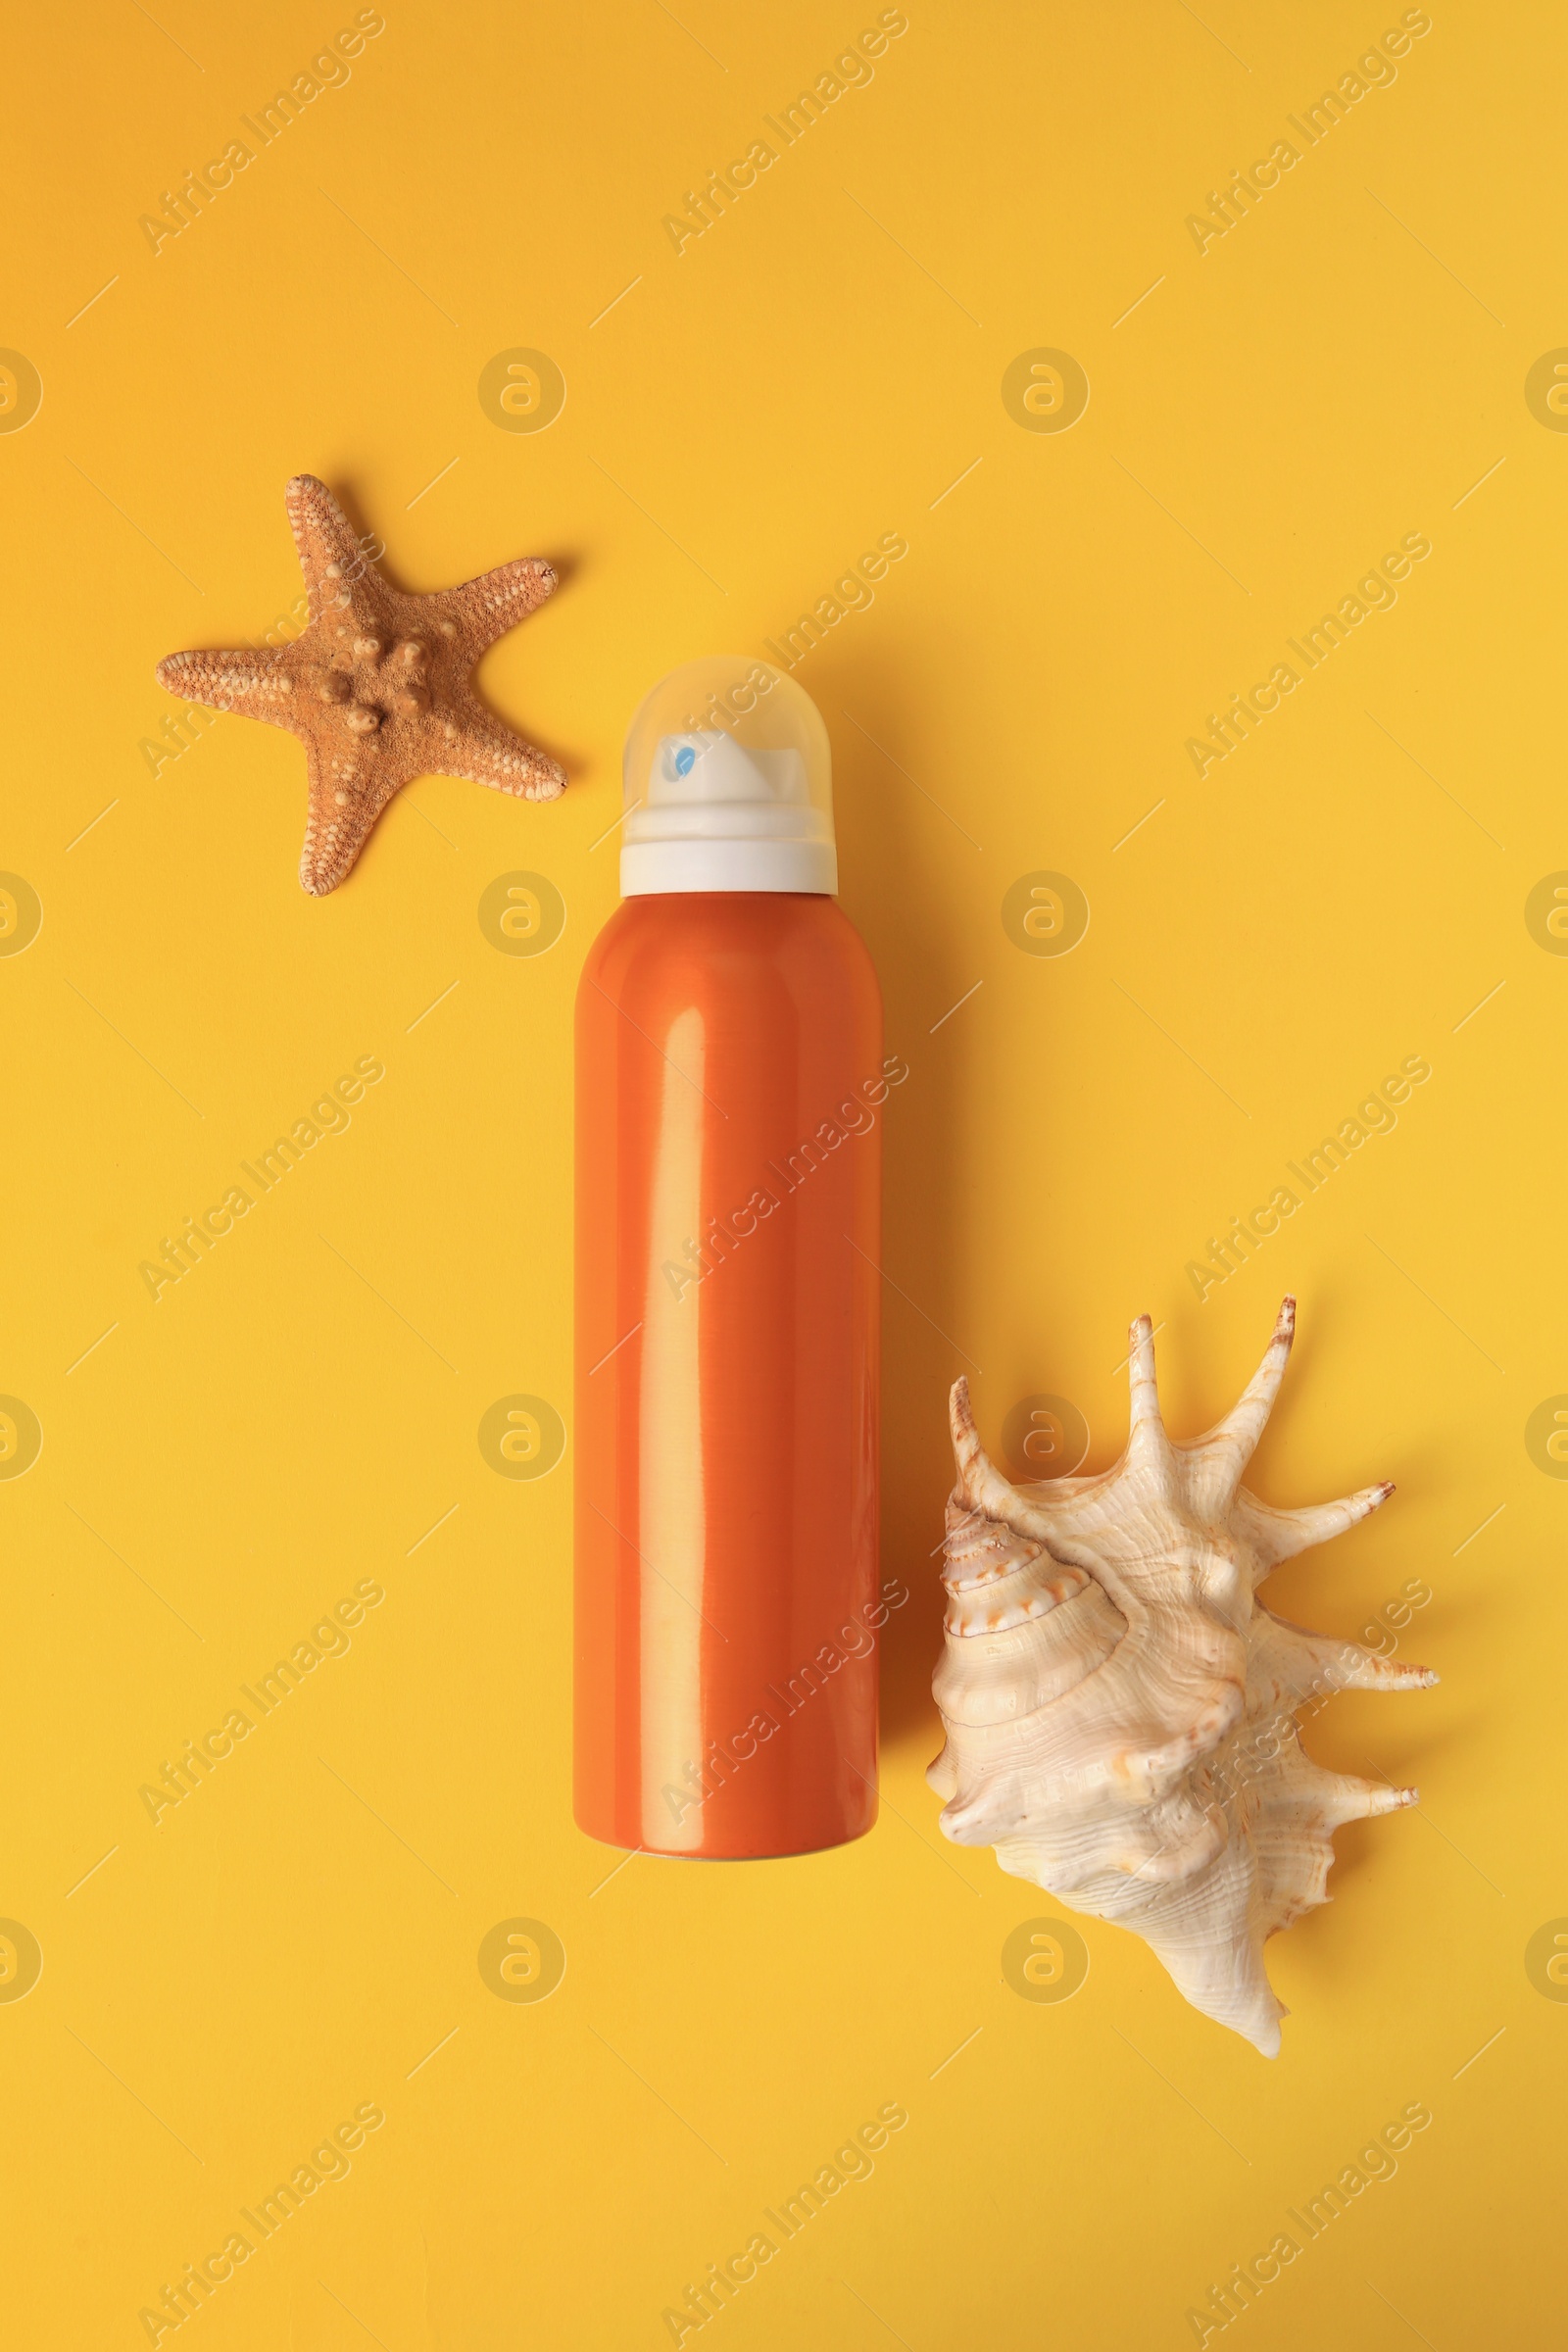 Photo of Bottle of sunscreen, starfish and seashell on yellow background, flat lay